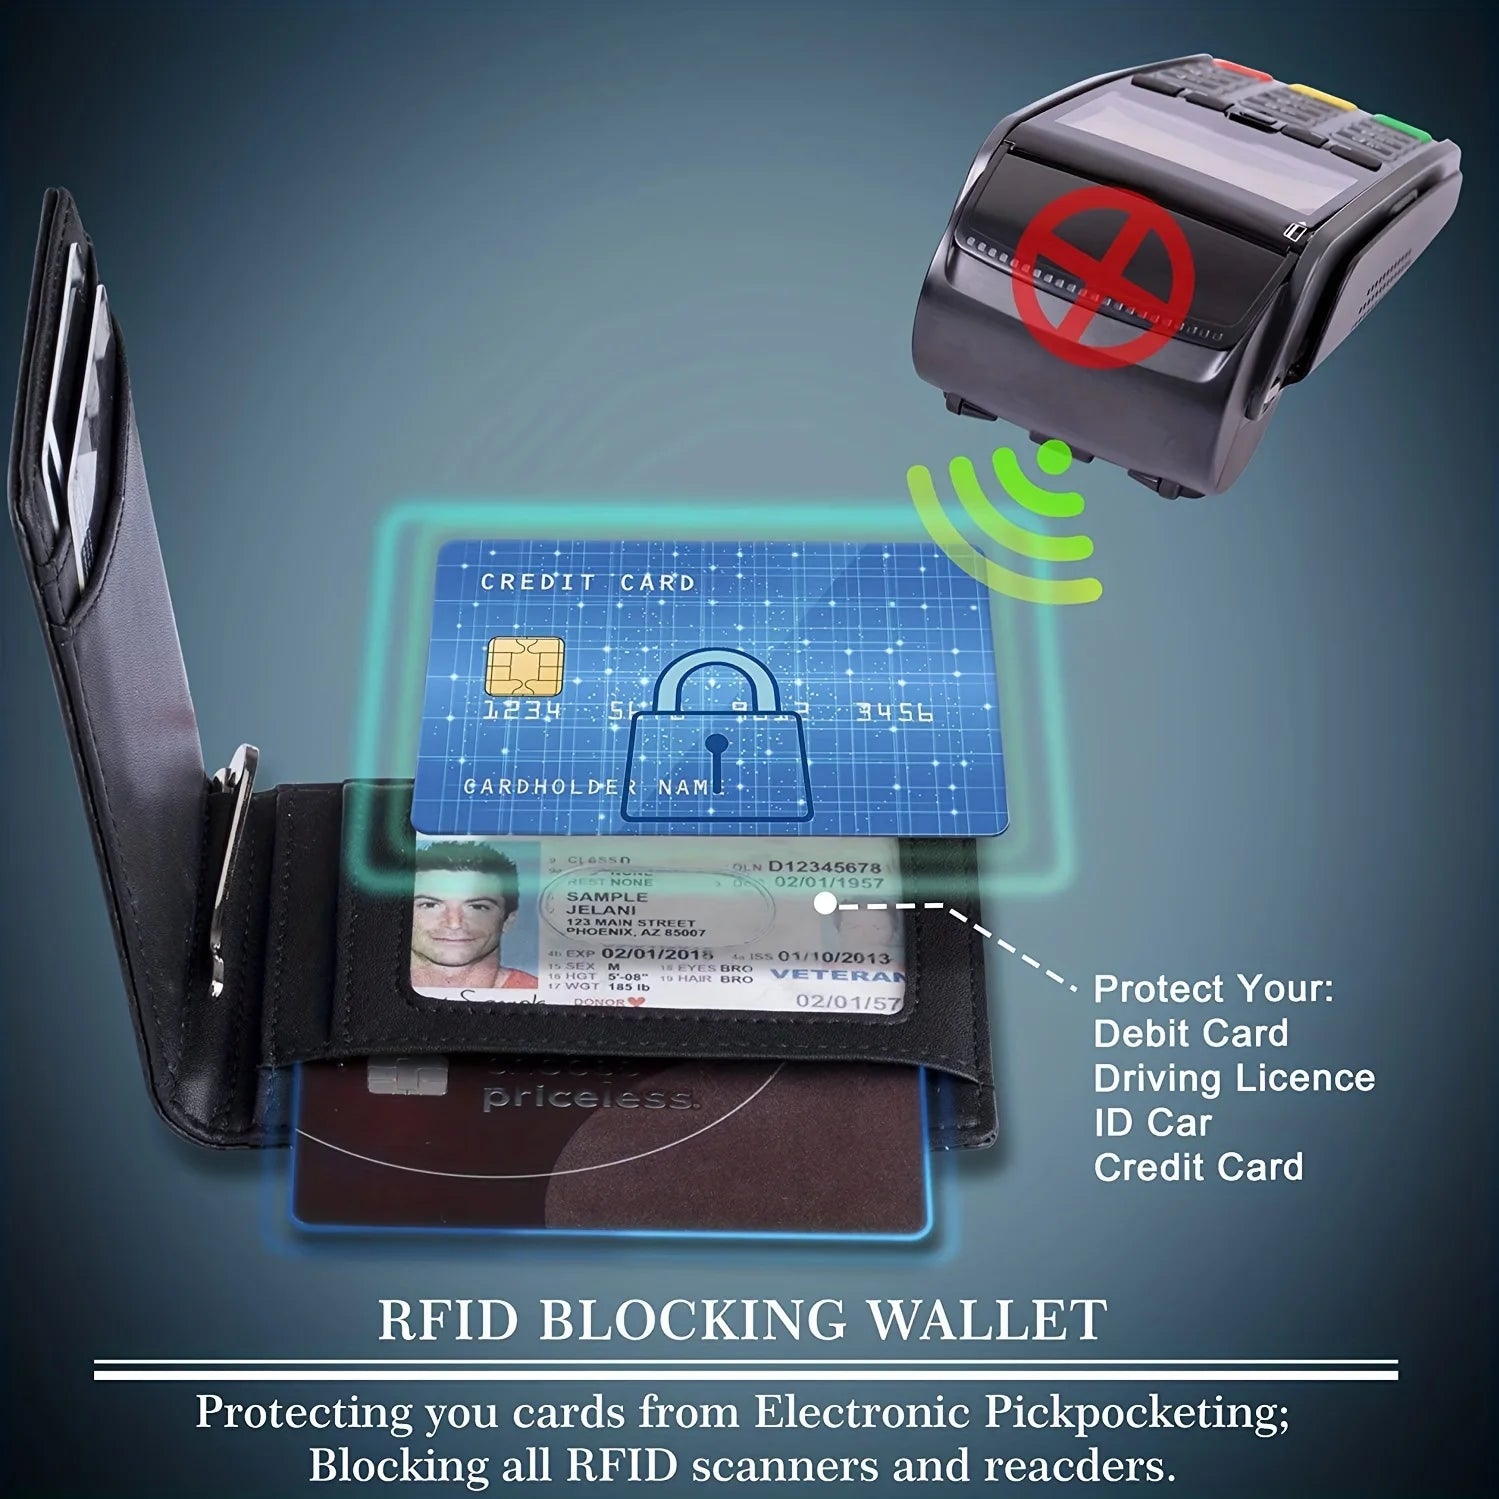 Leather Slim Wallet for Men with Money Credit Card Clip RFID Blocking Card Holder